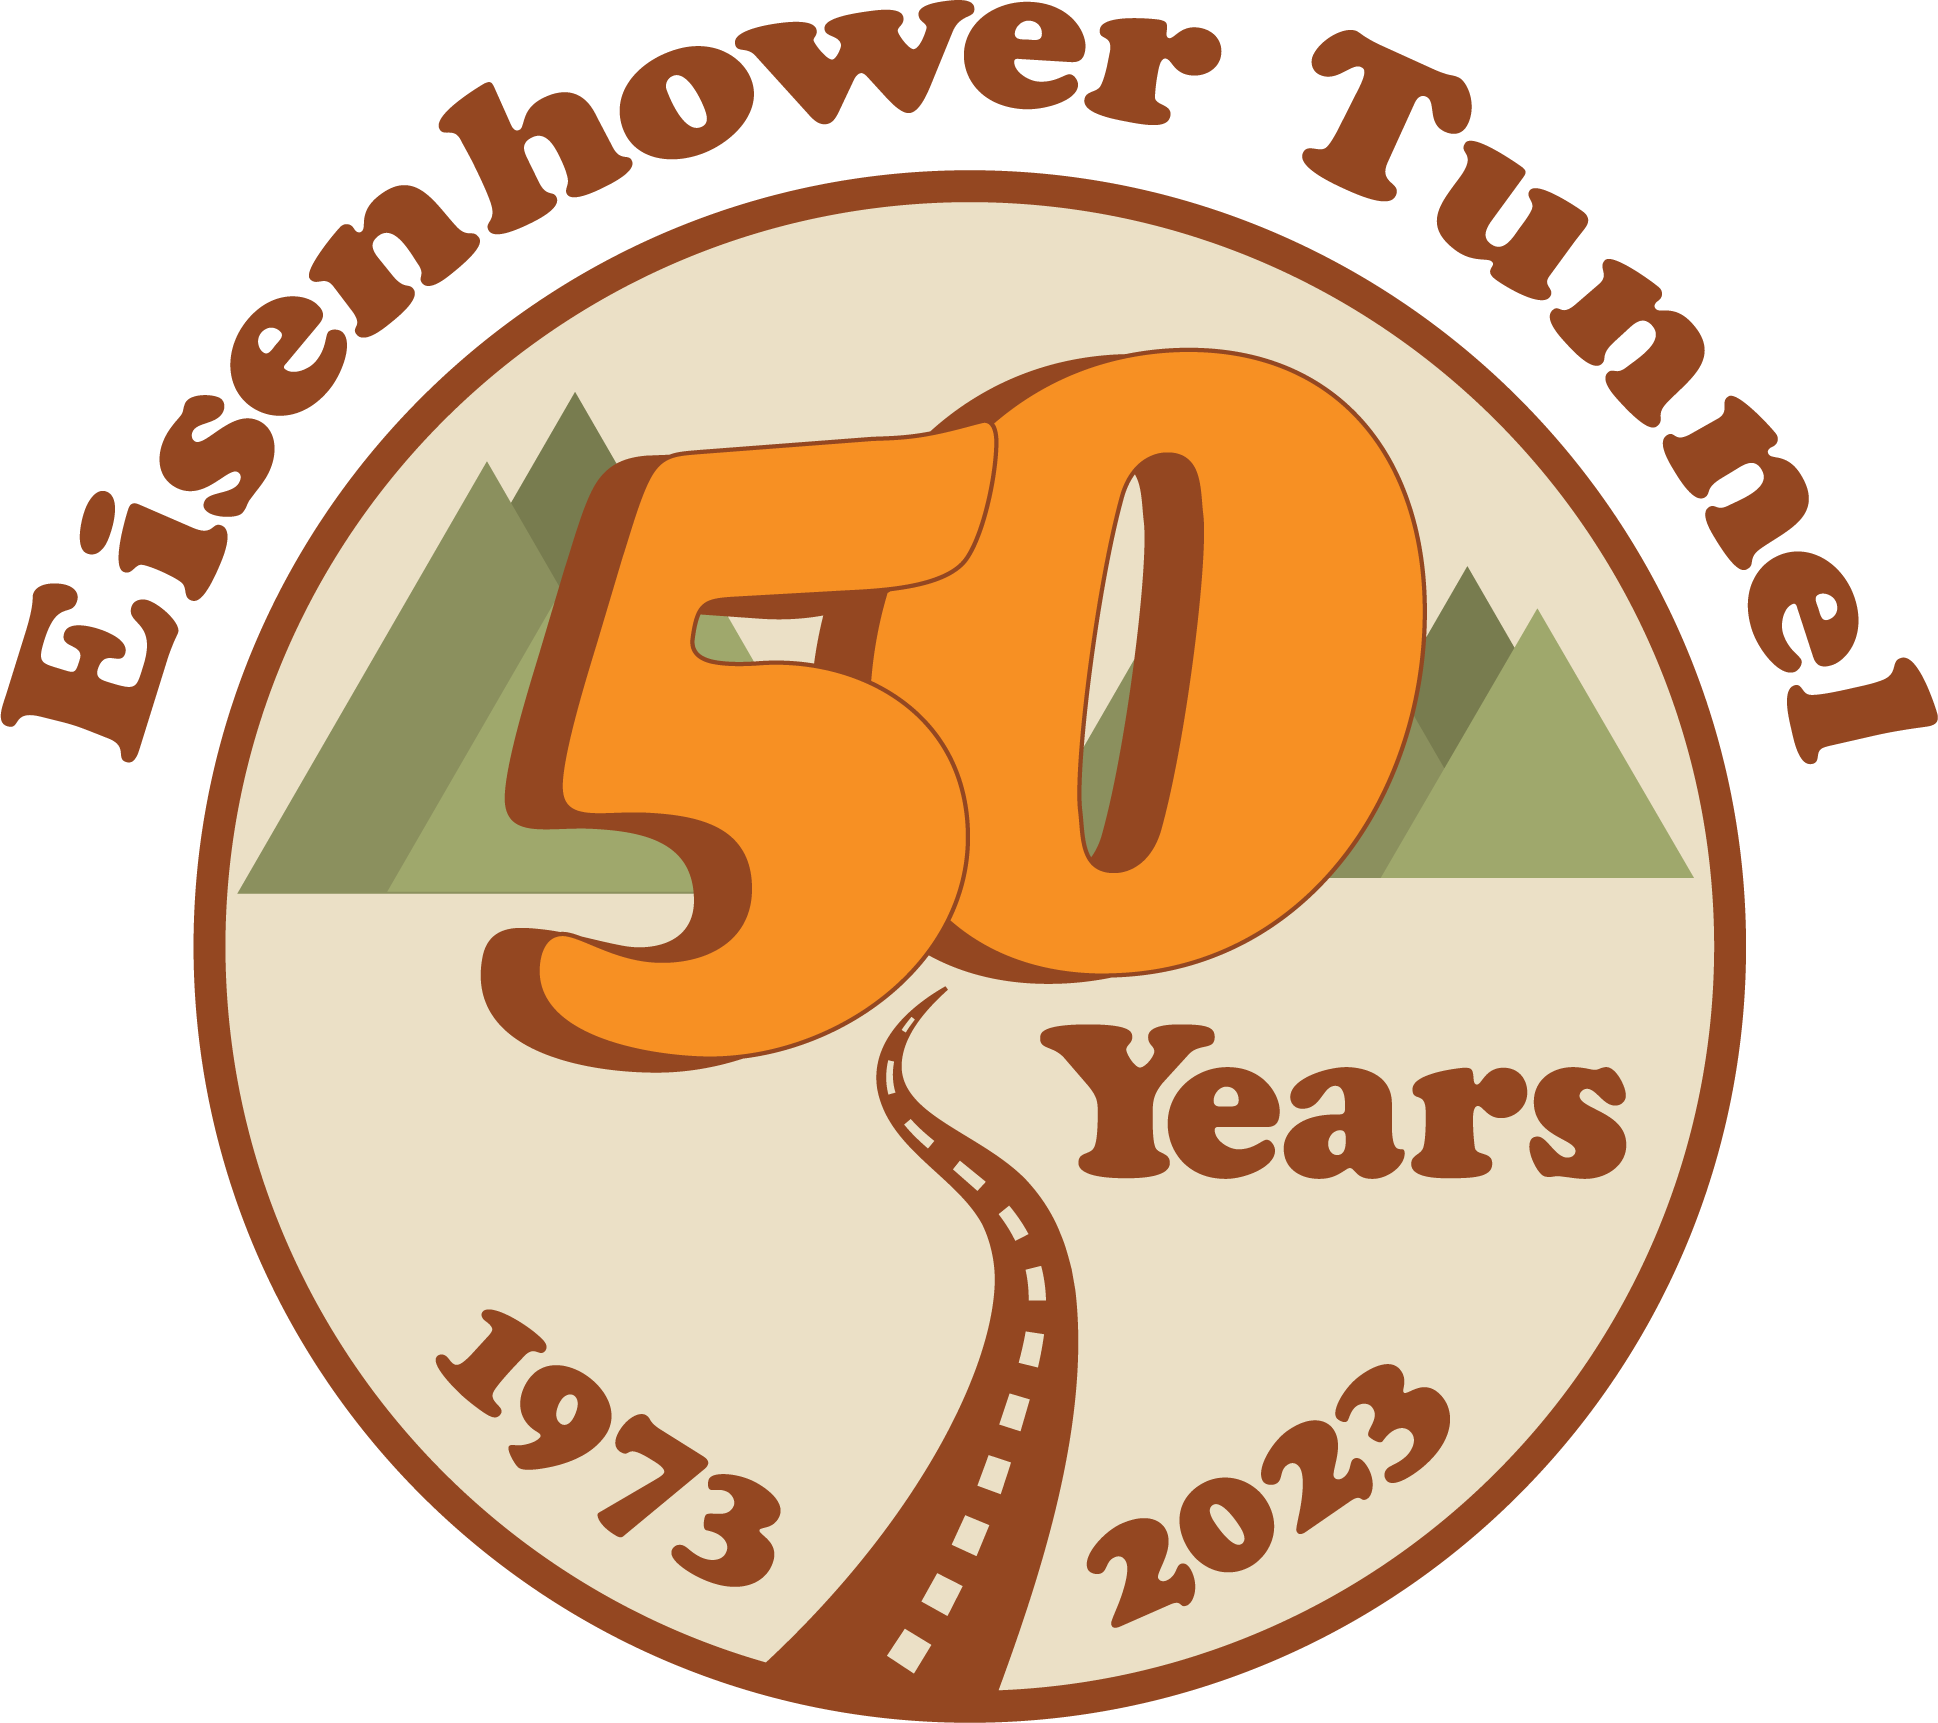 Eisenhower-Tunnel-50Years_Logo.png detail image